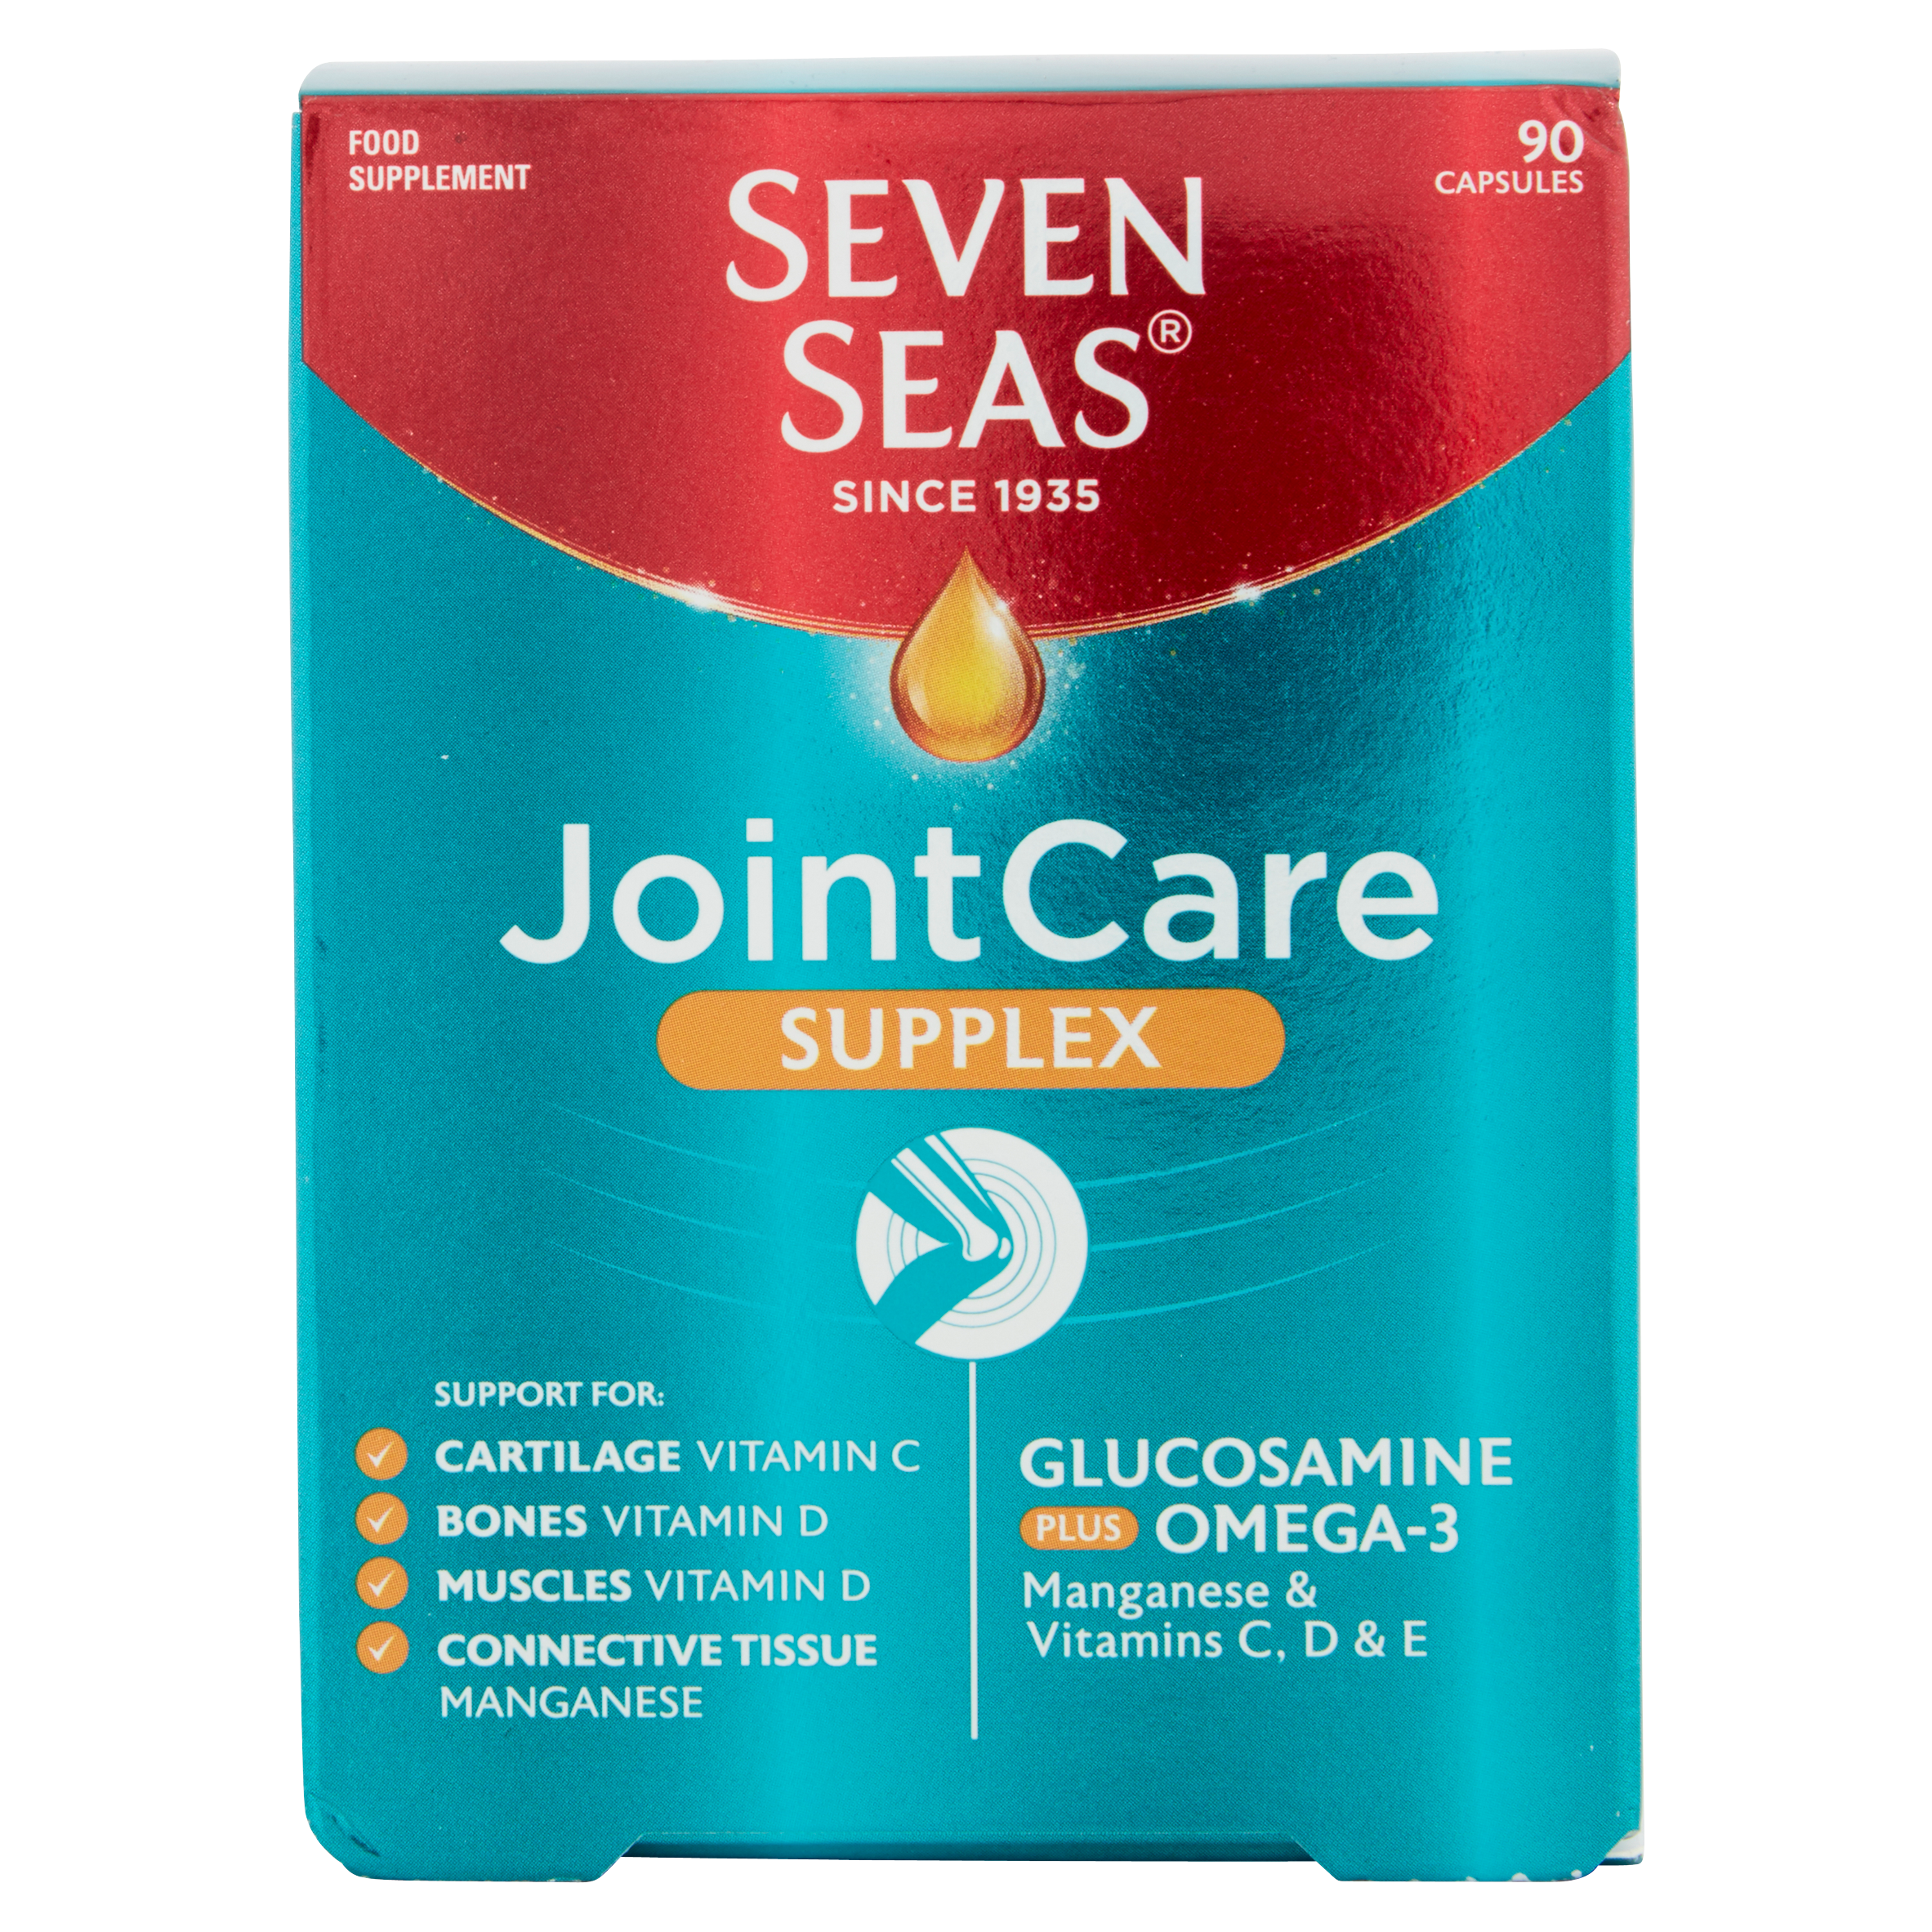 Seven Seas Jointcare Supplex Capsules